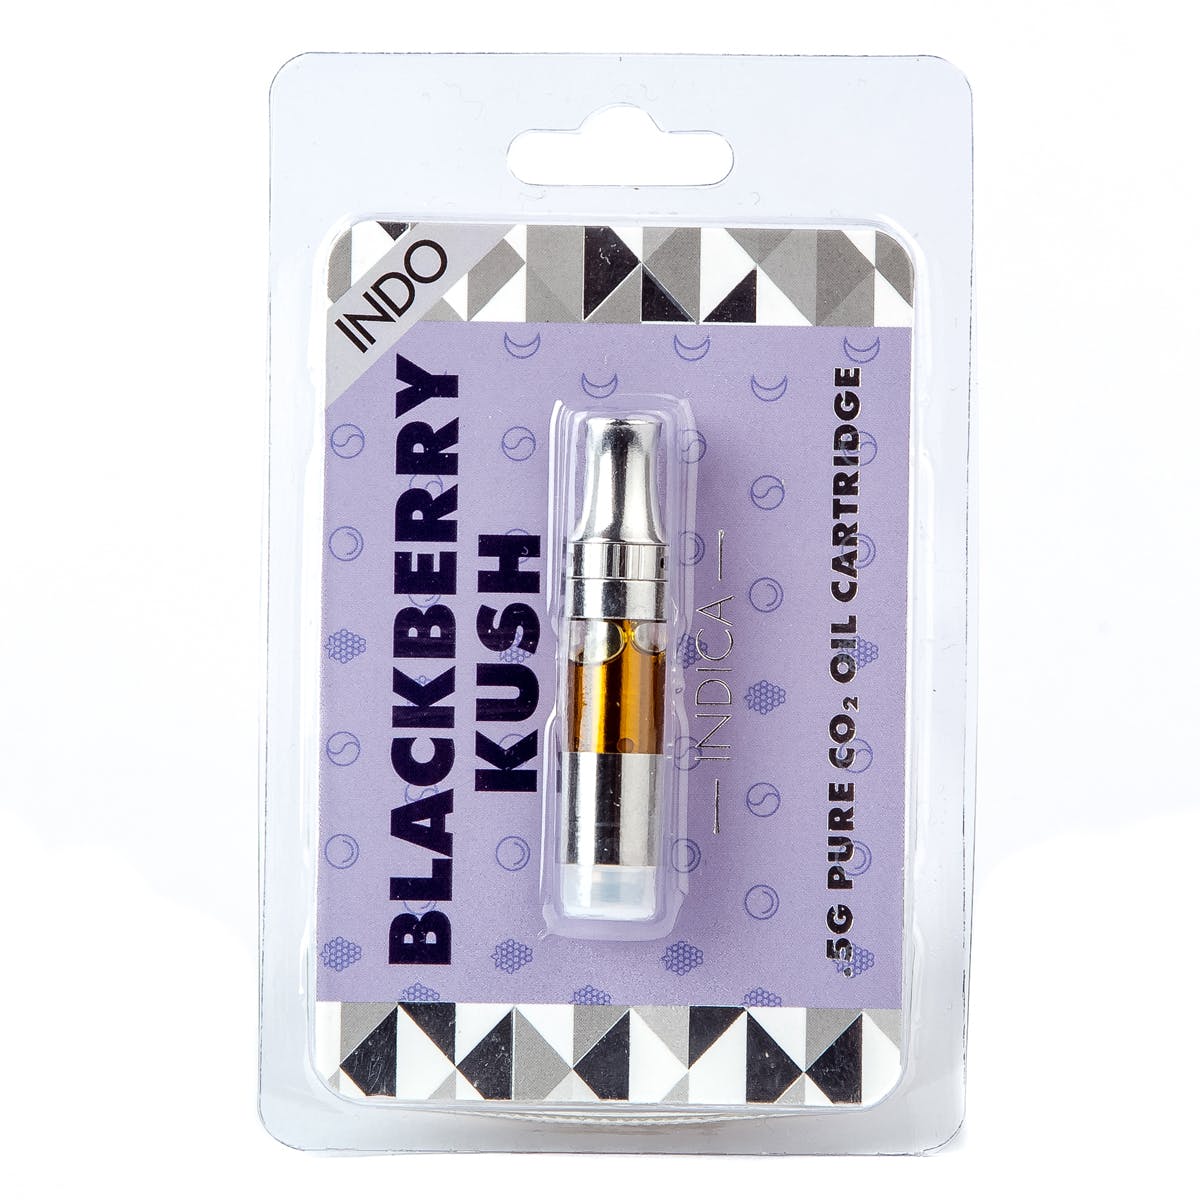 marijuana-dispensaries-local-roots-brier-in-brier-blackberry-kush-cartridge